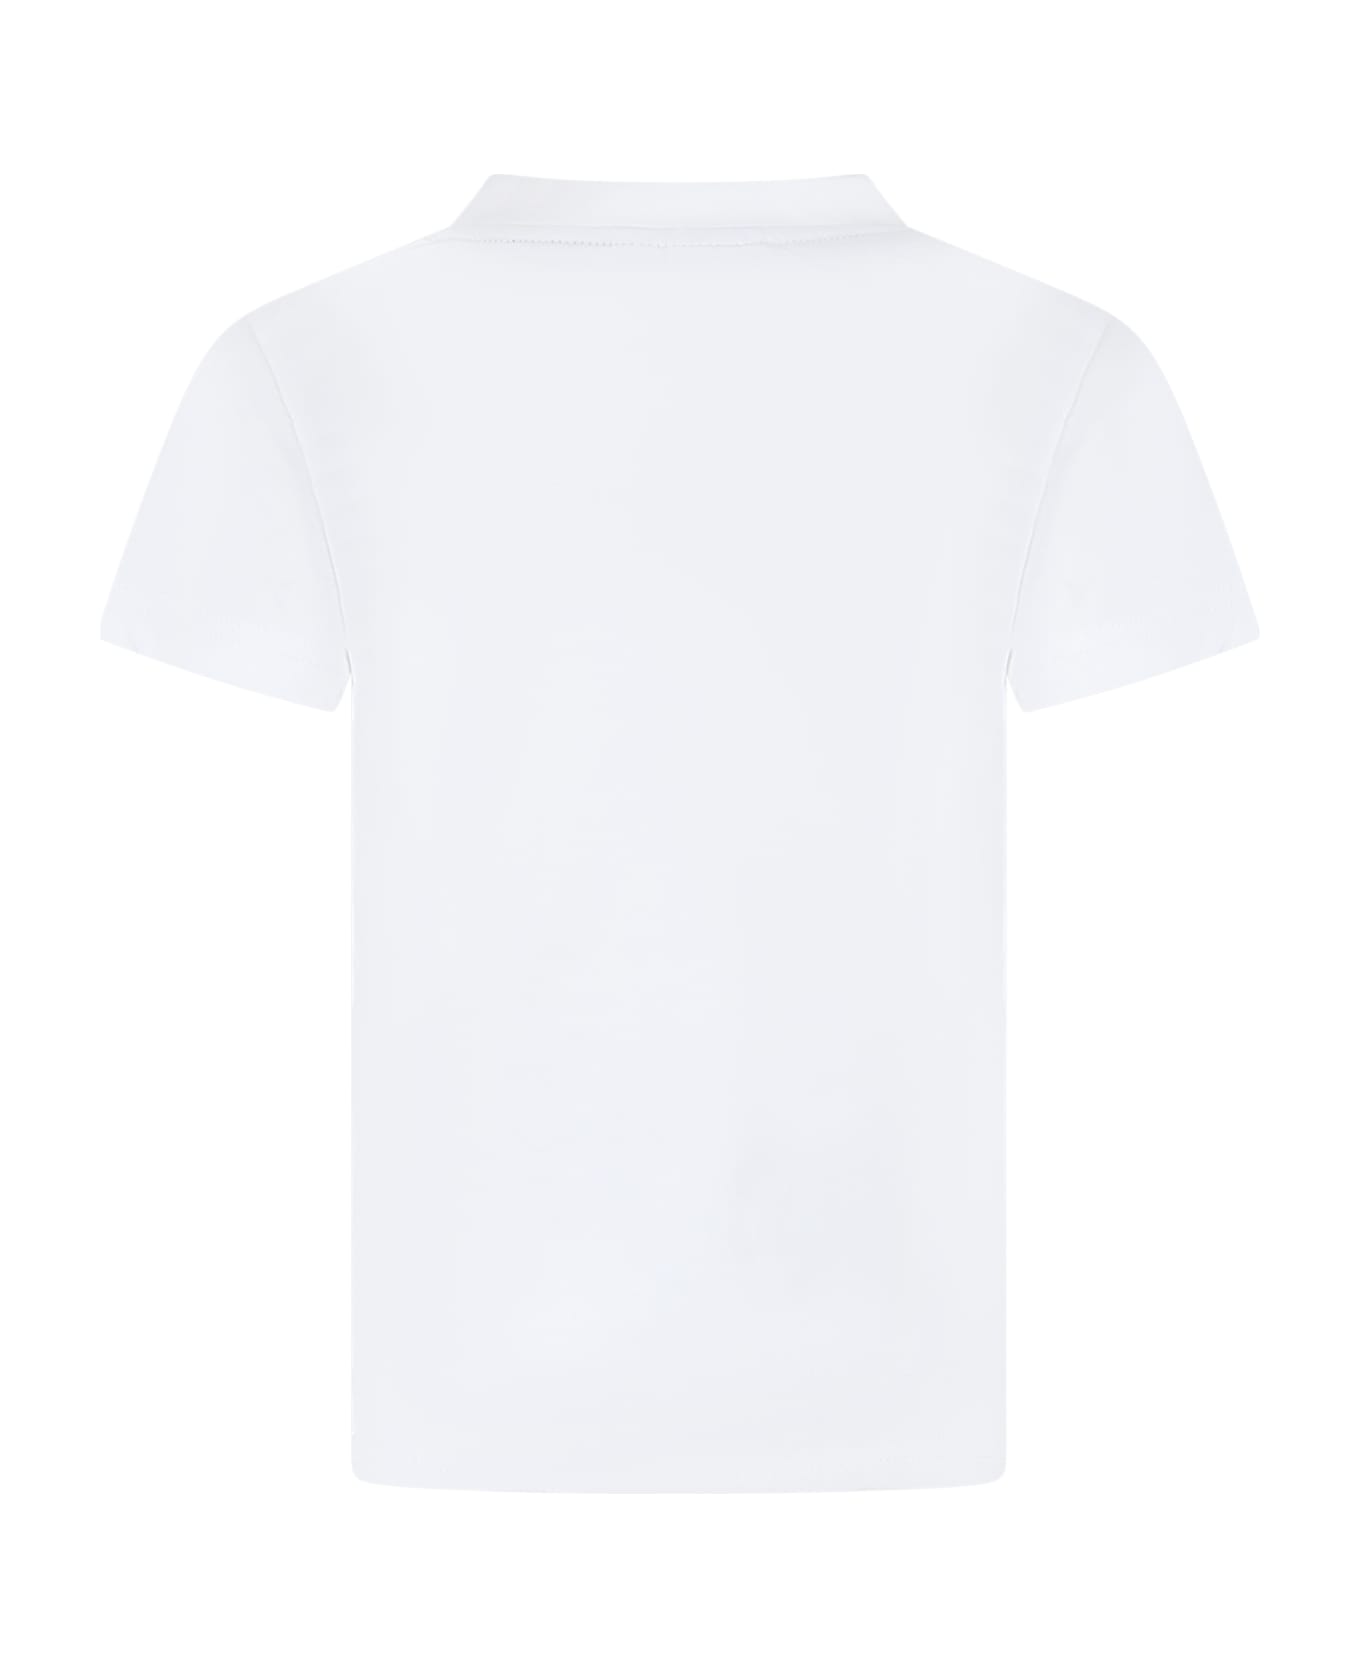 Lacoste T-shirt Bianca Per Bambino Con Patch Logo Iconico - White